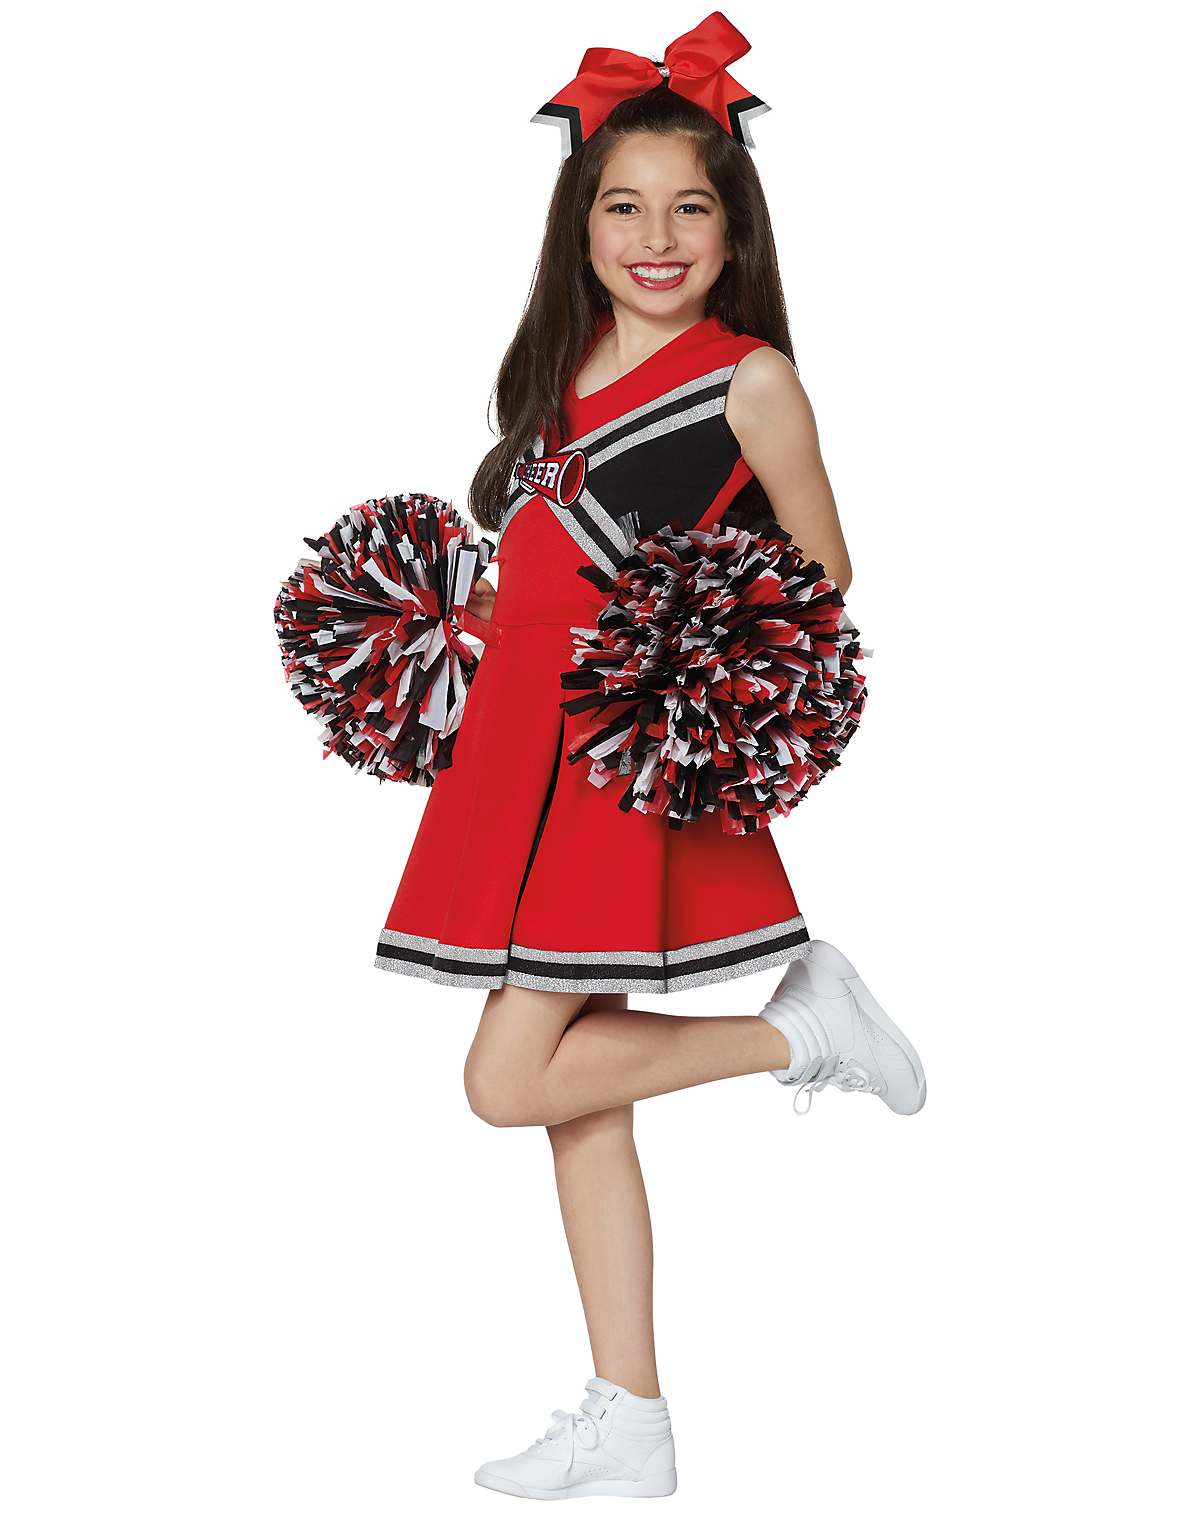 Kids Red and Black Cheerleader Costume